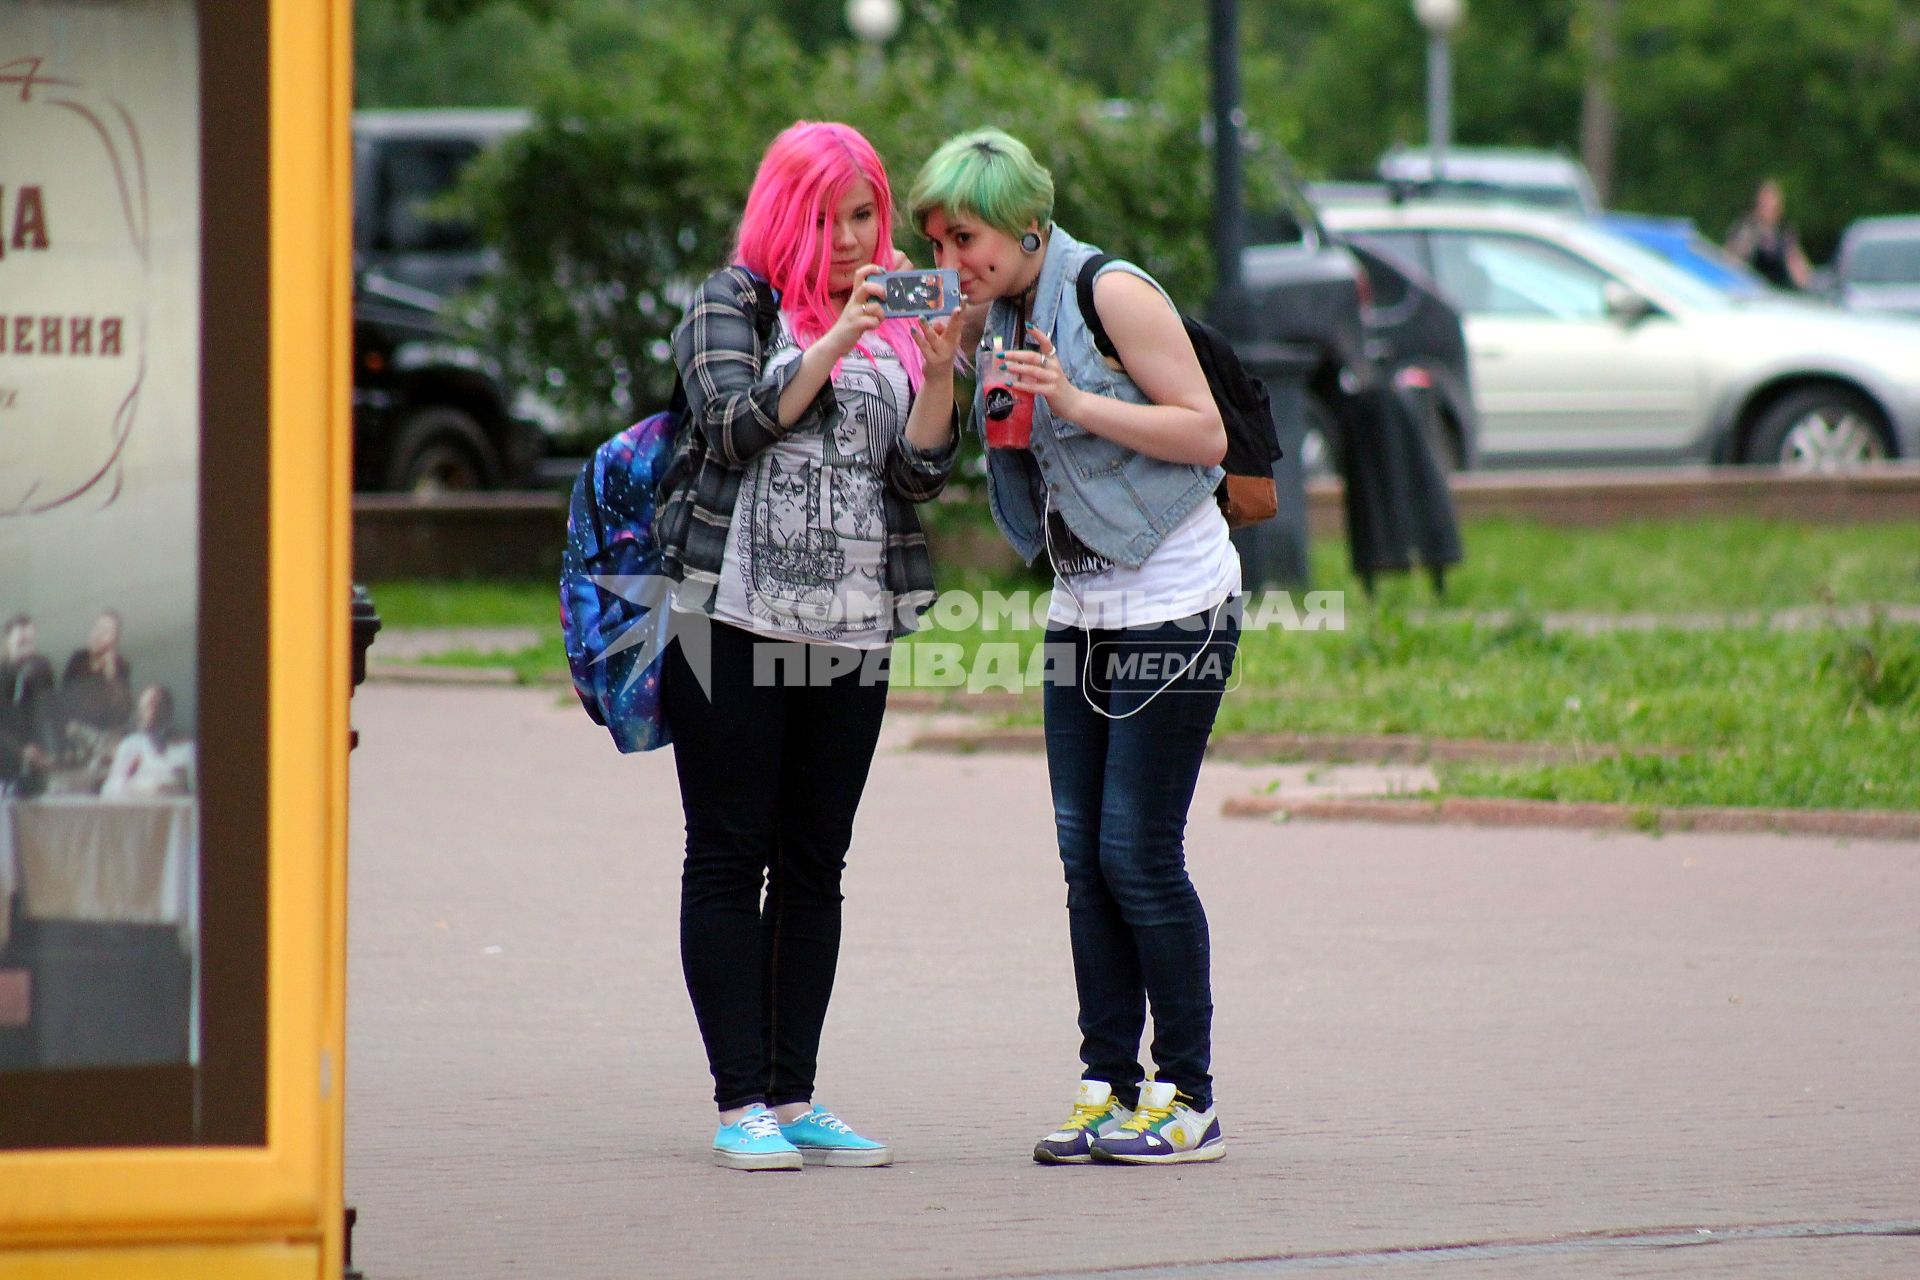 Нижний Новгород. Девушки делают селфи на улице.